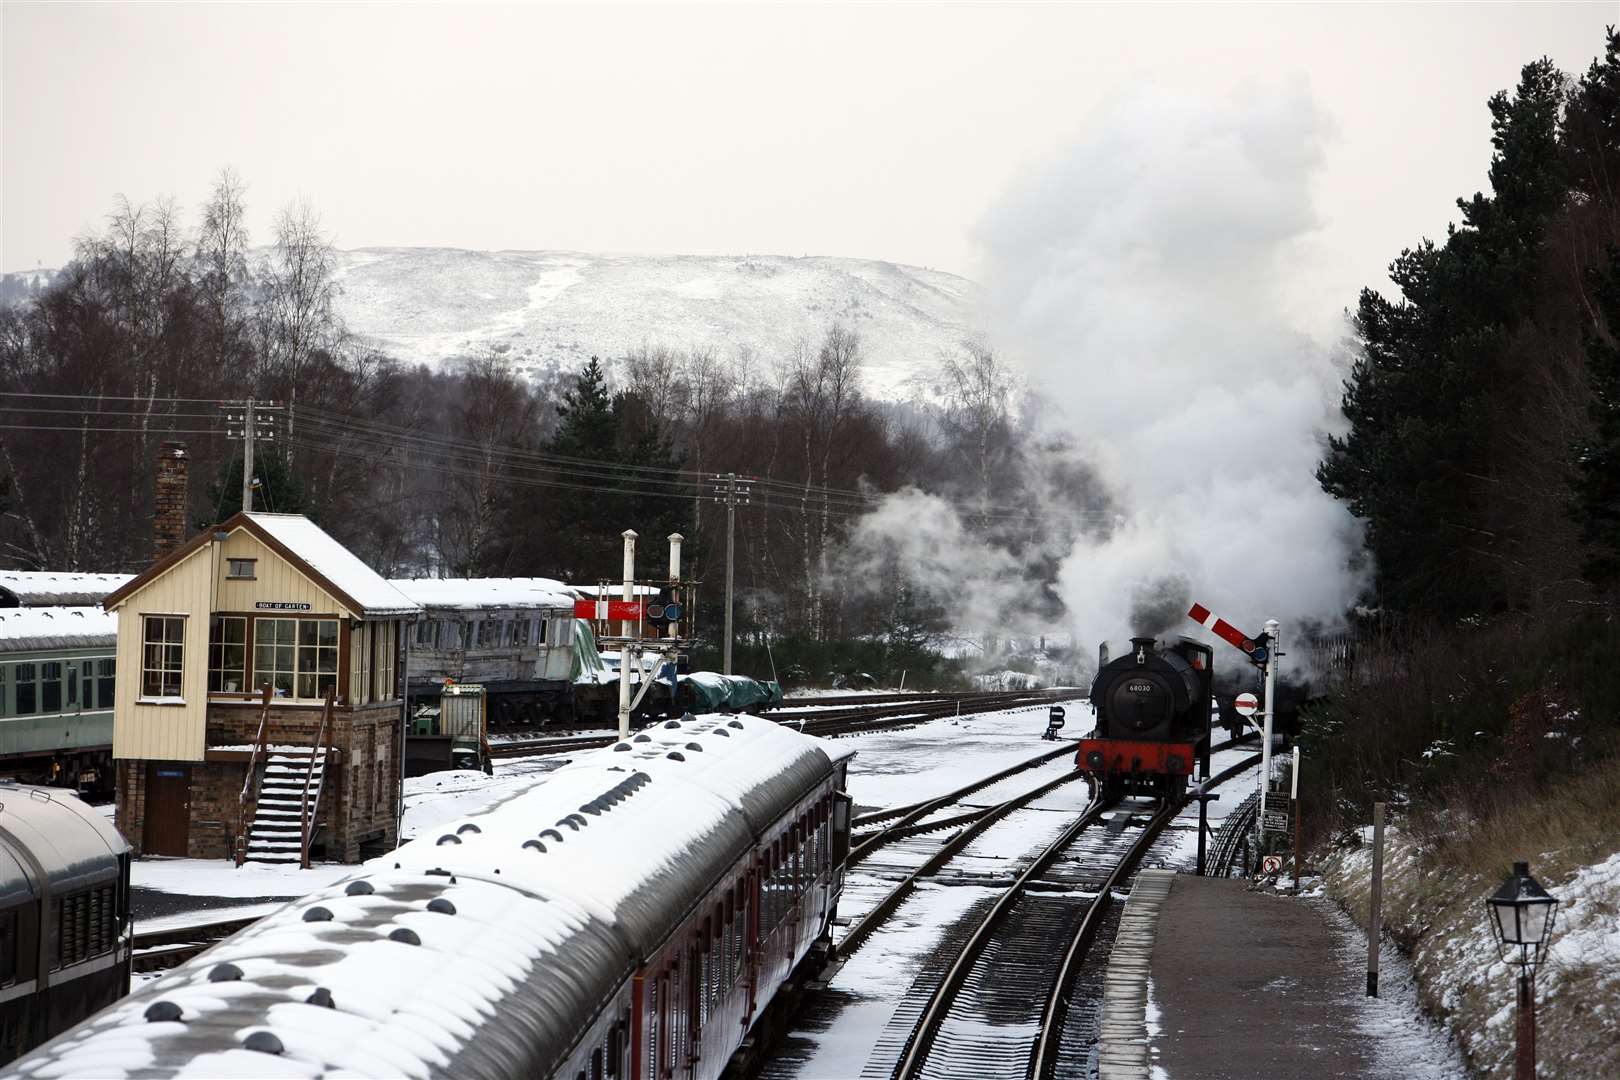 Strathspey Steam Railway. Picture: Paul Tomkins / VisitScotland